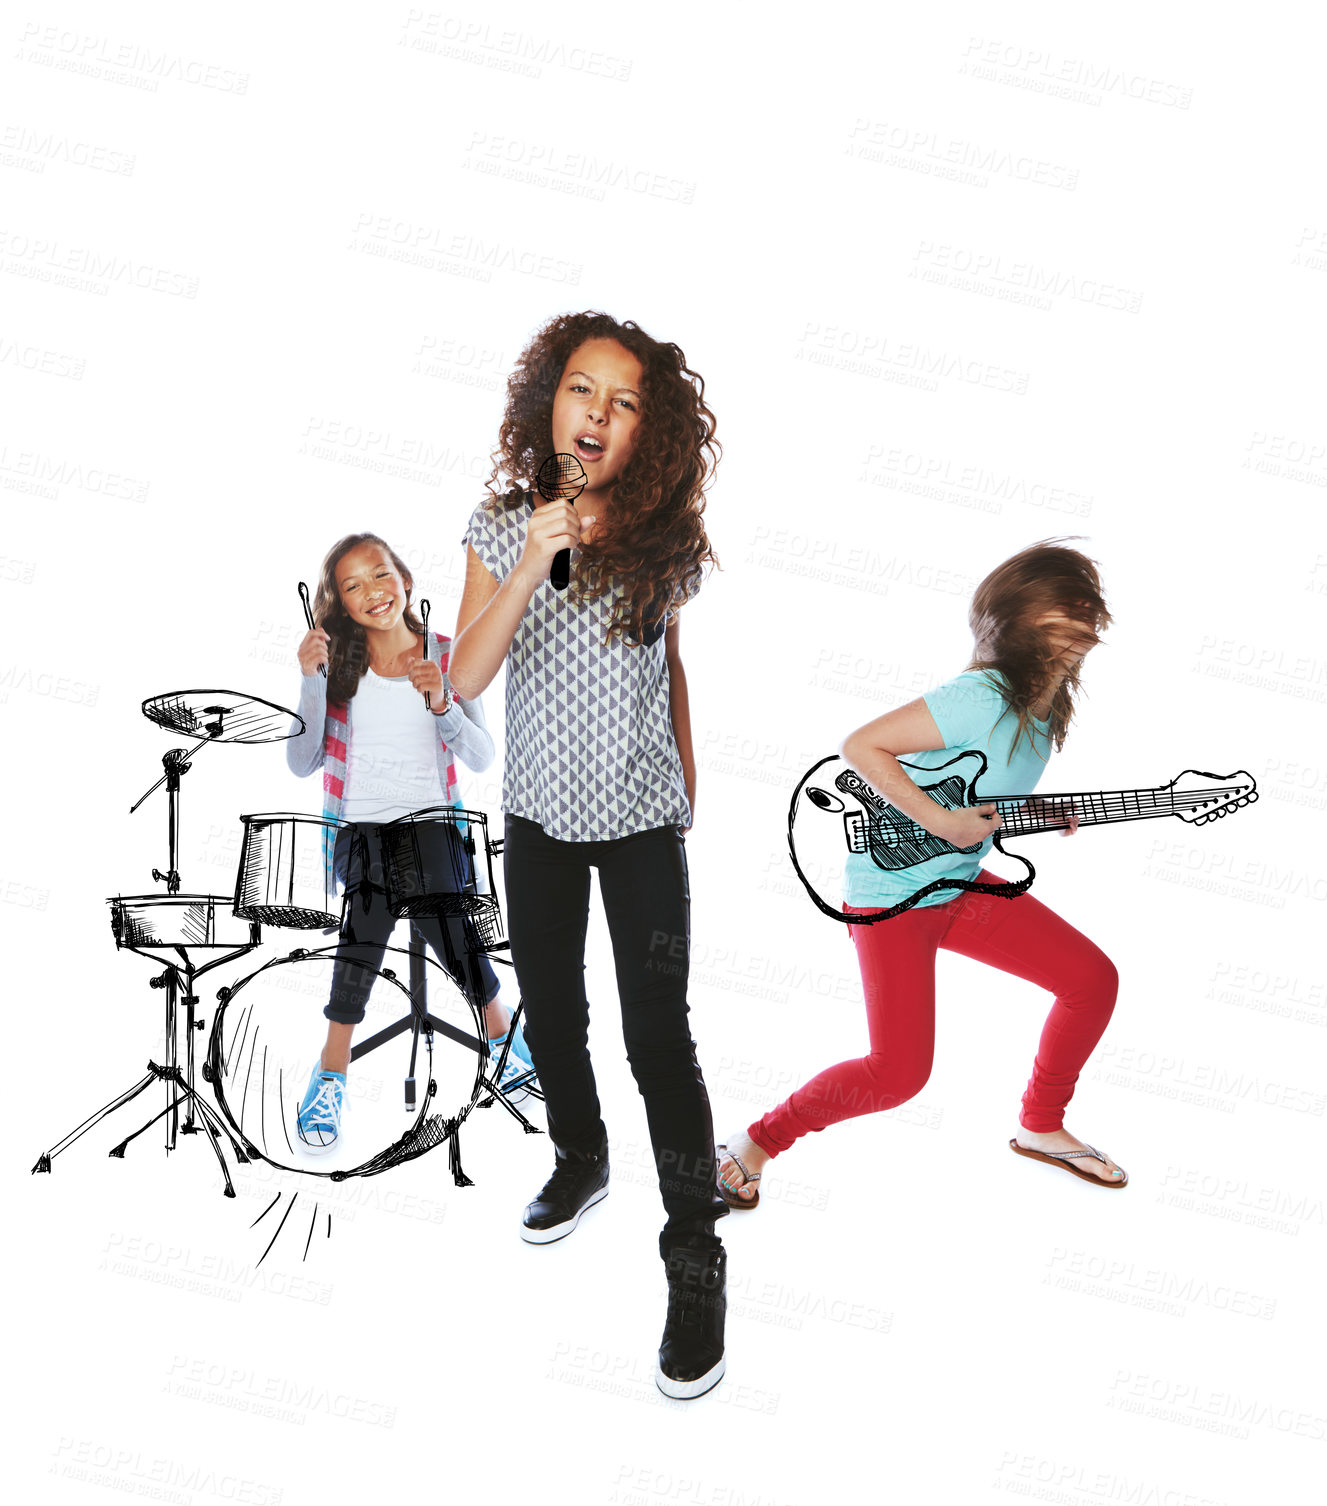 Buy stock photo Studio shot of children singing and playing music on imaginary instruments